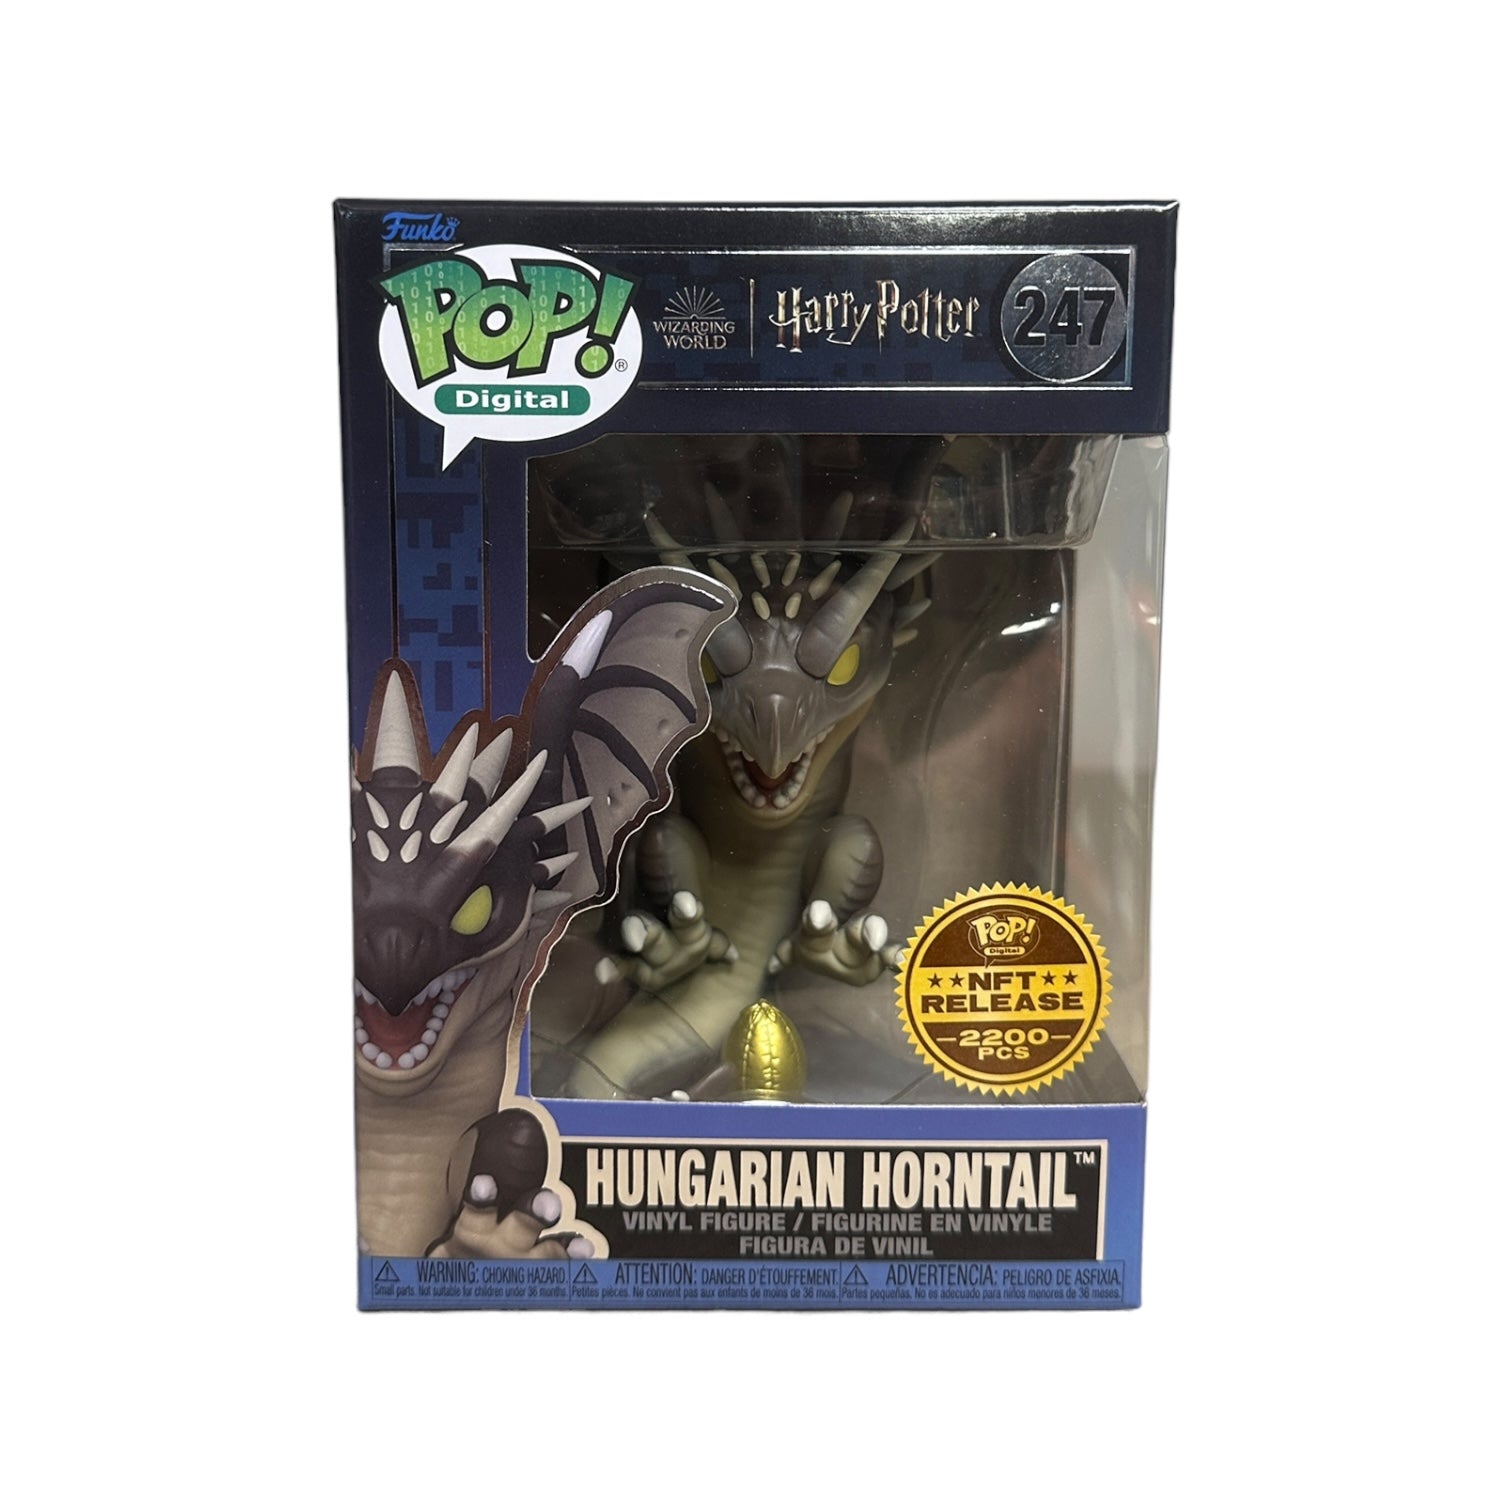 Hungarian Horntail #247 Funko Pop! - Harry Potter - NFT Release Exclusive LE2200 Pcs - Condition 9/10